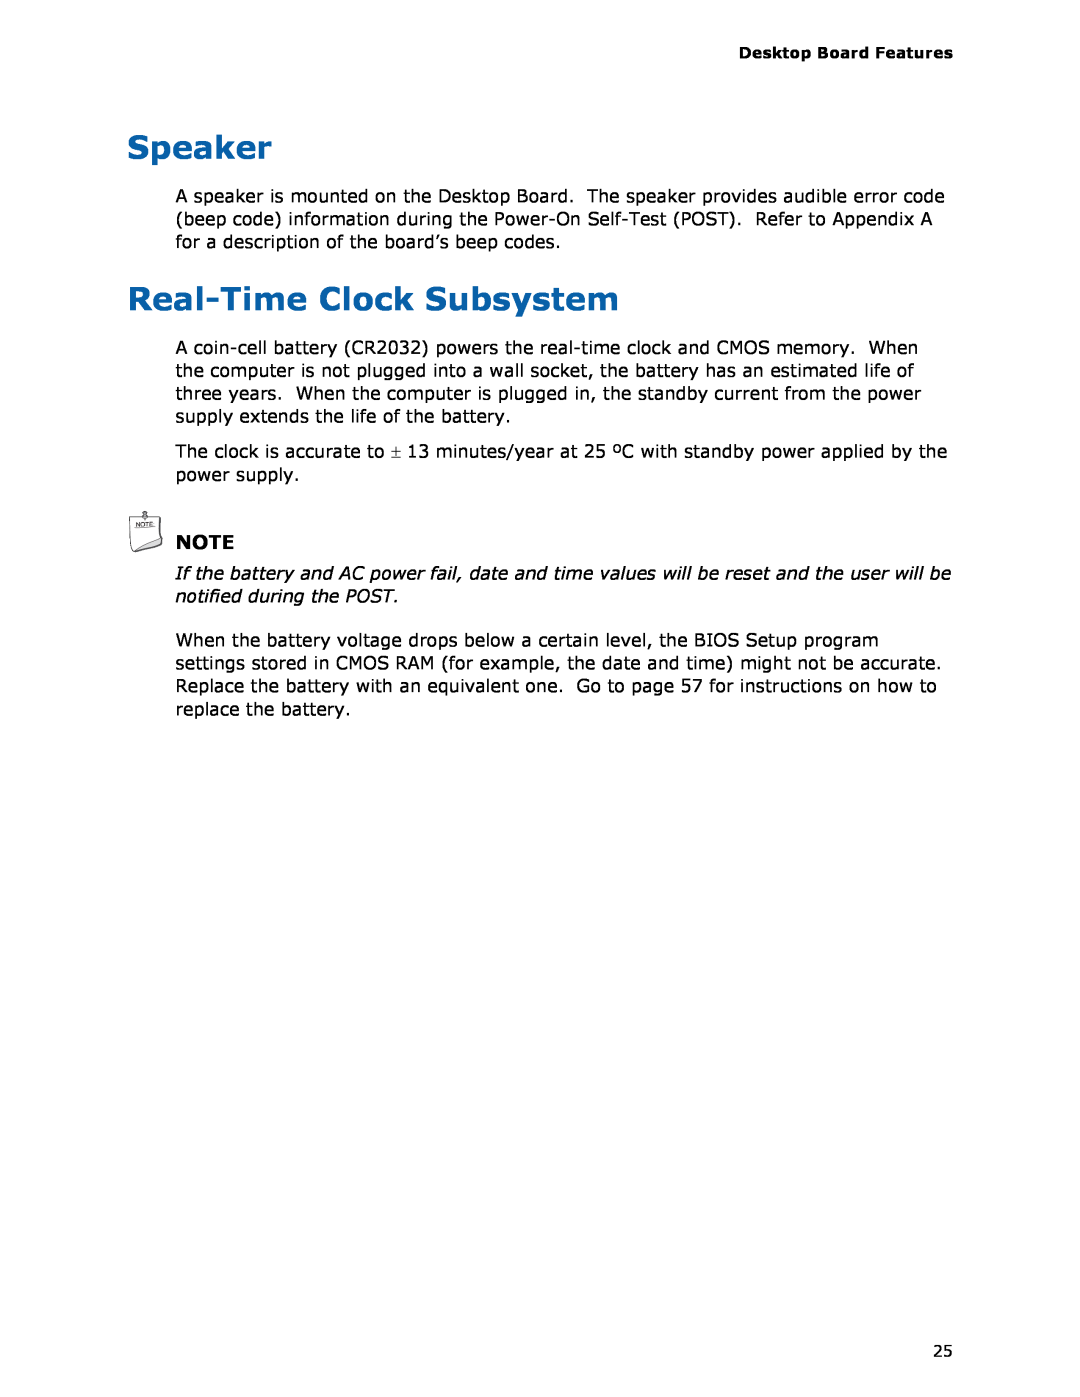 Intel BOXDH55HC manual Speaker, Real-Time Clock Subsystem 